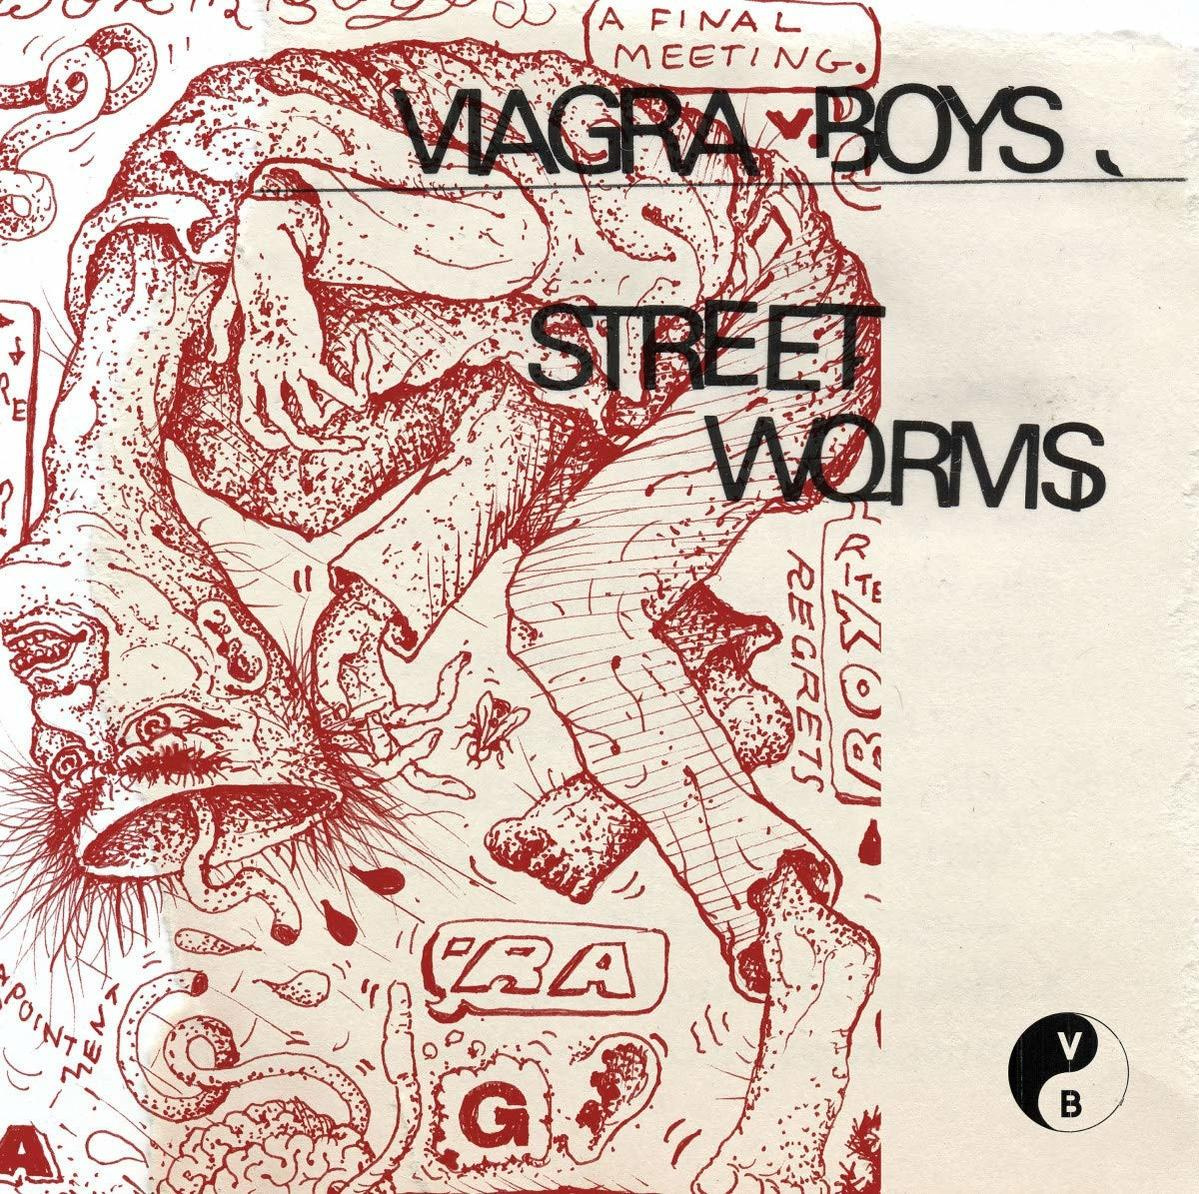 - (Vinyl) - Boys Viagra Street Worms